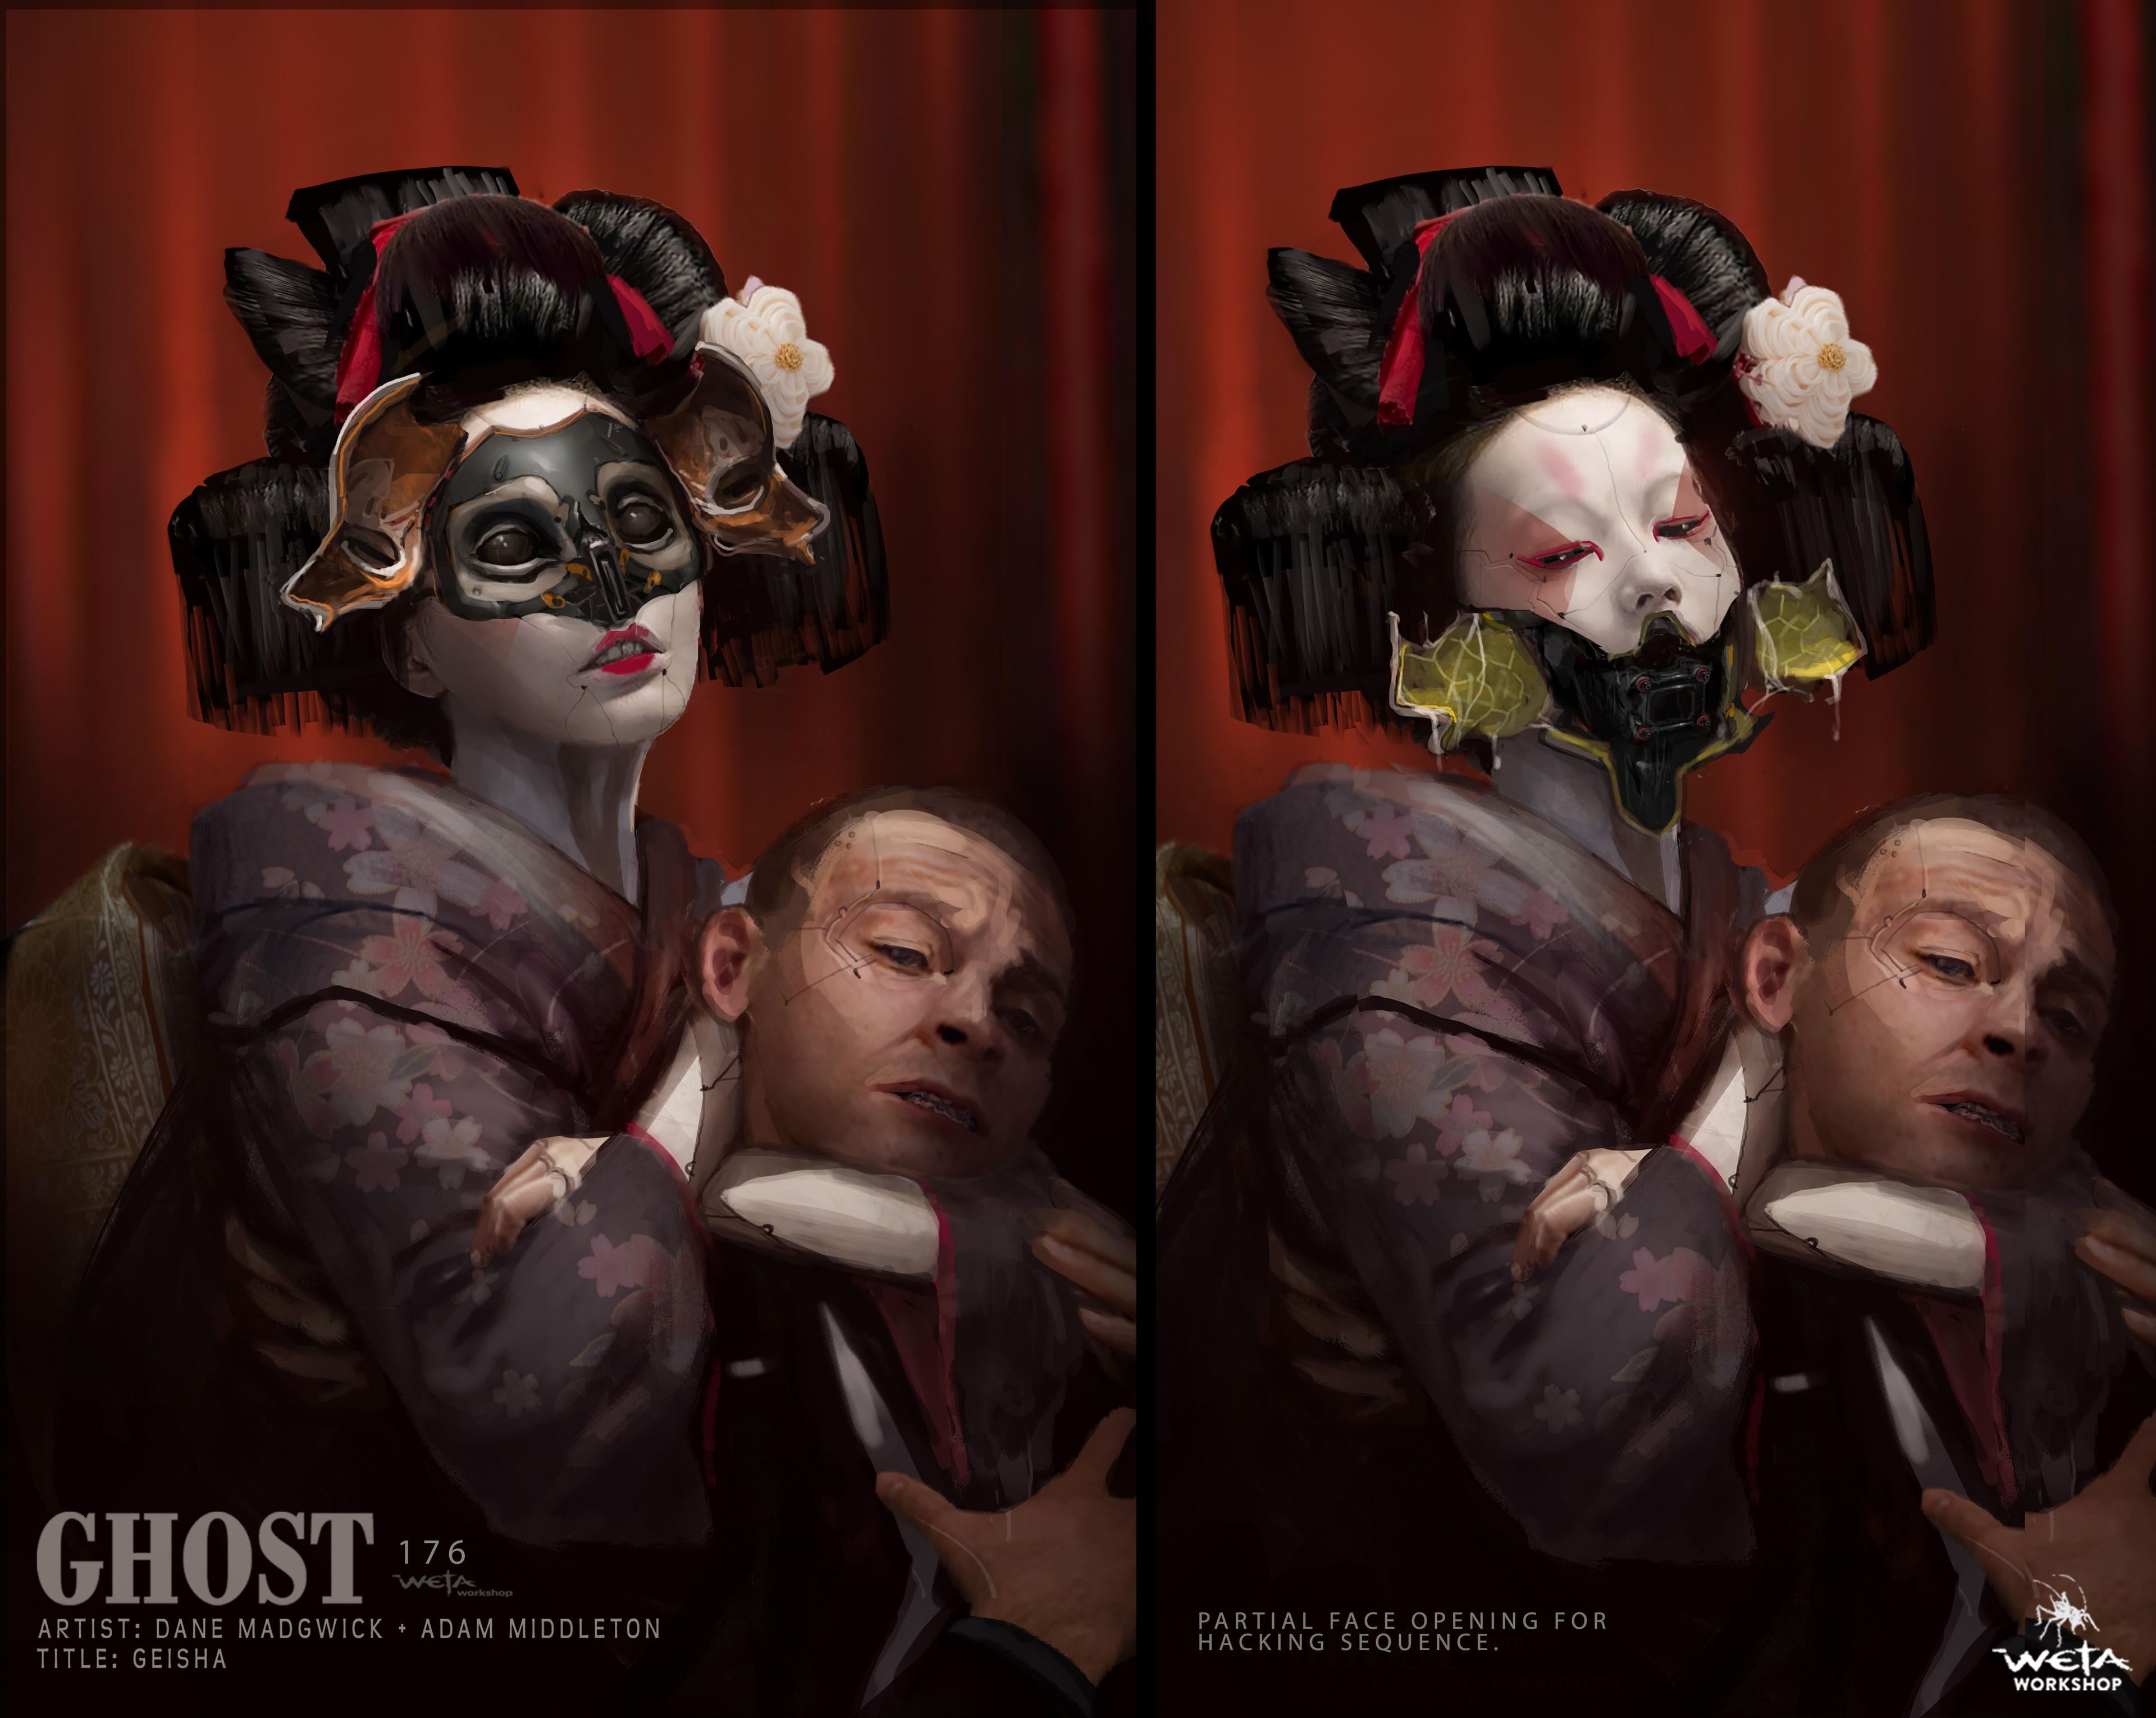 Hacked Geisha Design - Artists: Dane Madgwick and Adam Middleton